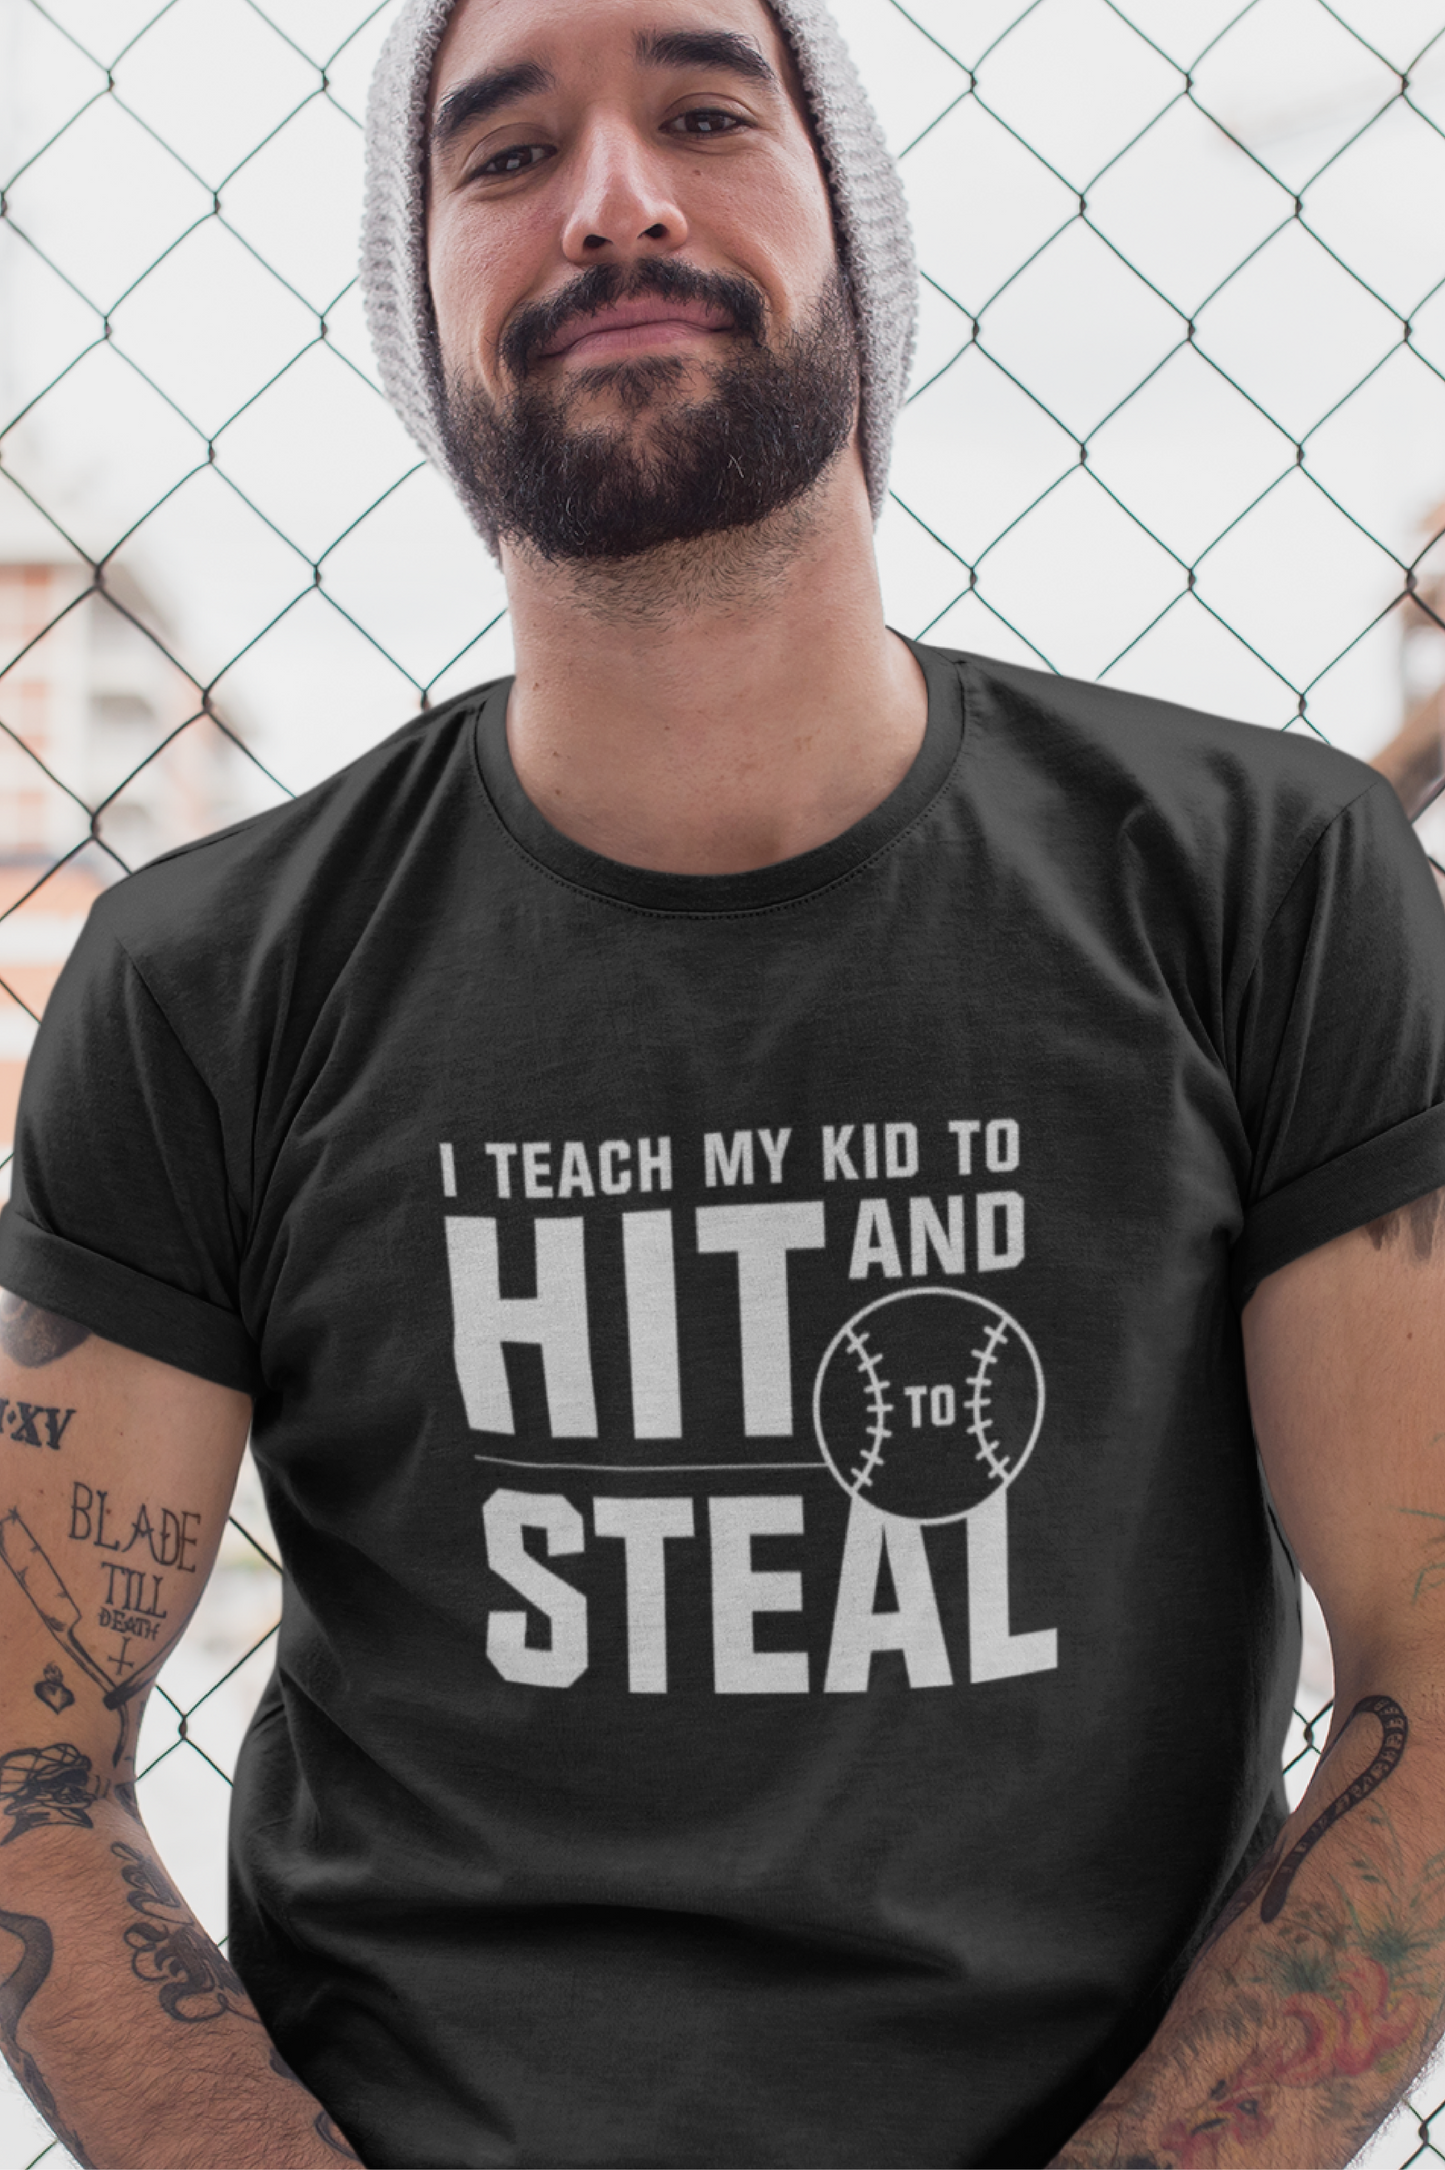 ADULT - "I teach my kid" Moisture-Wicking T-Shirt - (Black, White, or Gray)